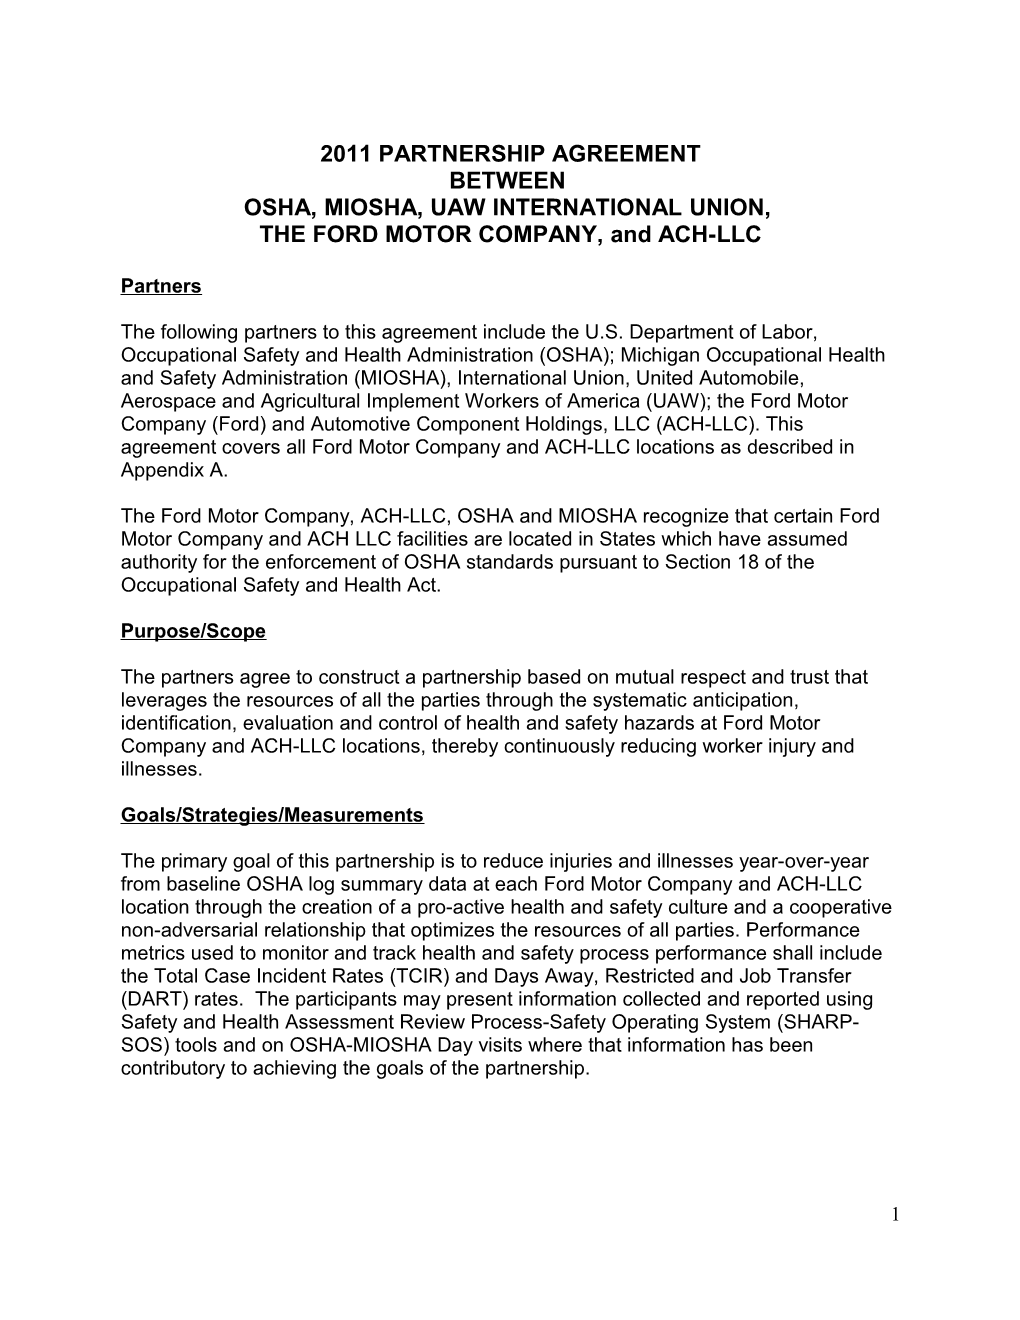 2011 Partnership Agreement Between OSHA, MIOSHA, UAW International Union, the Ford Motor